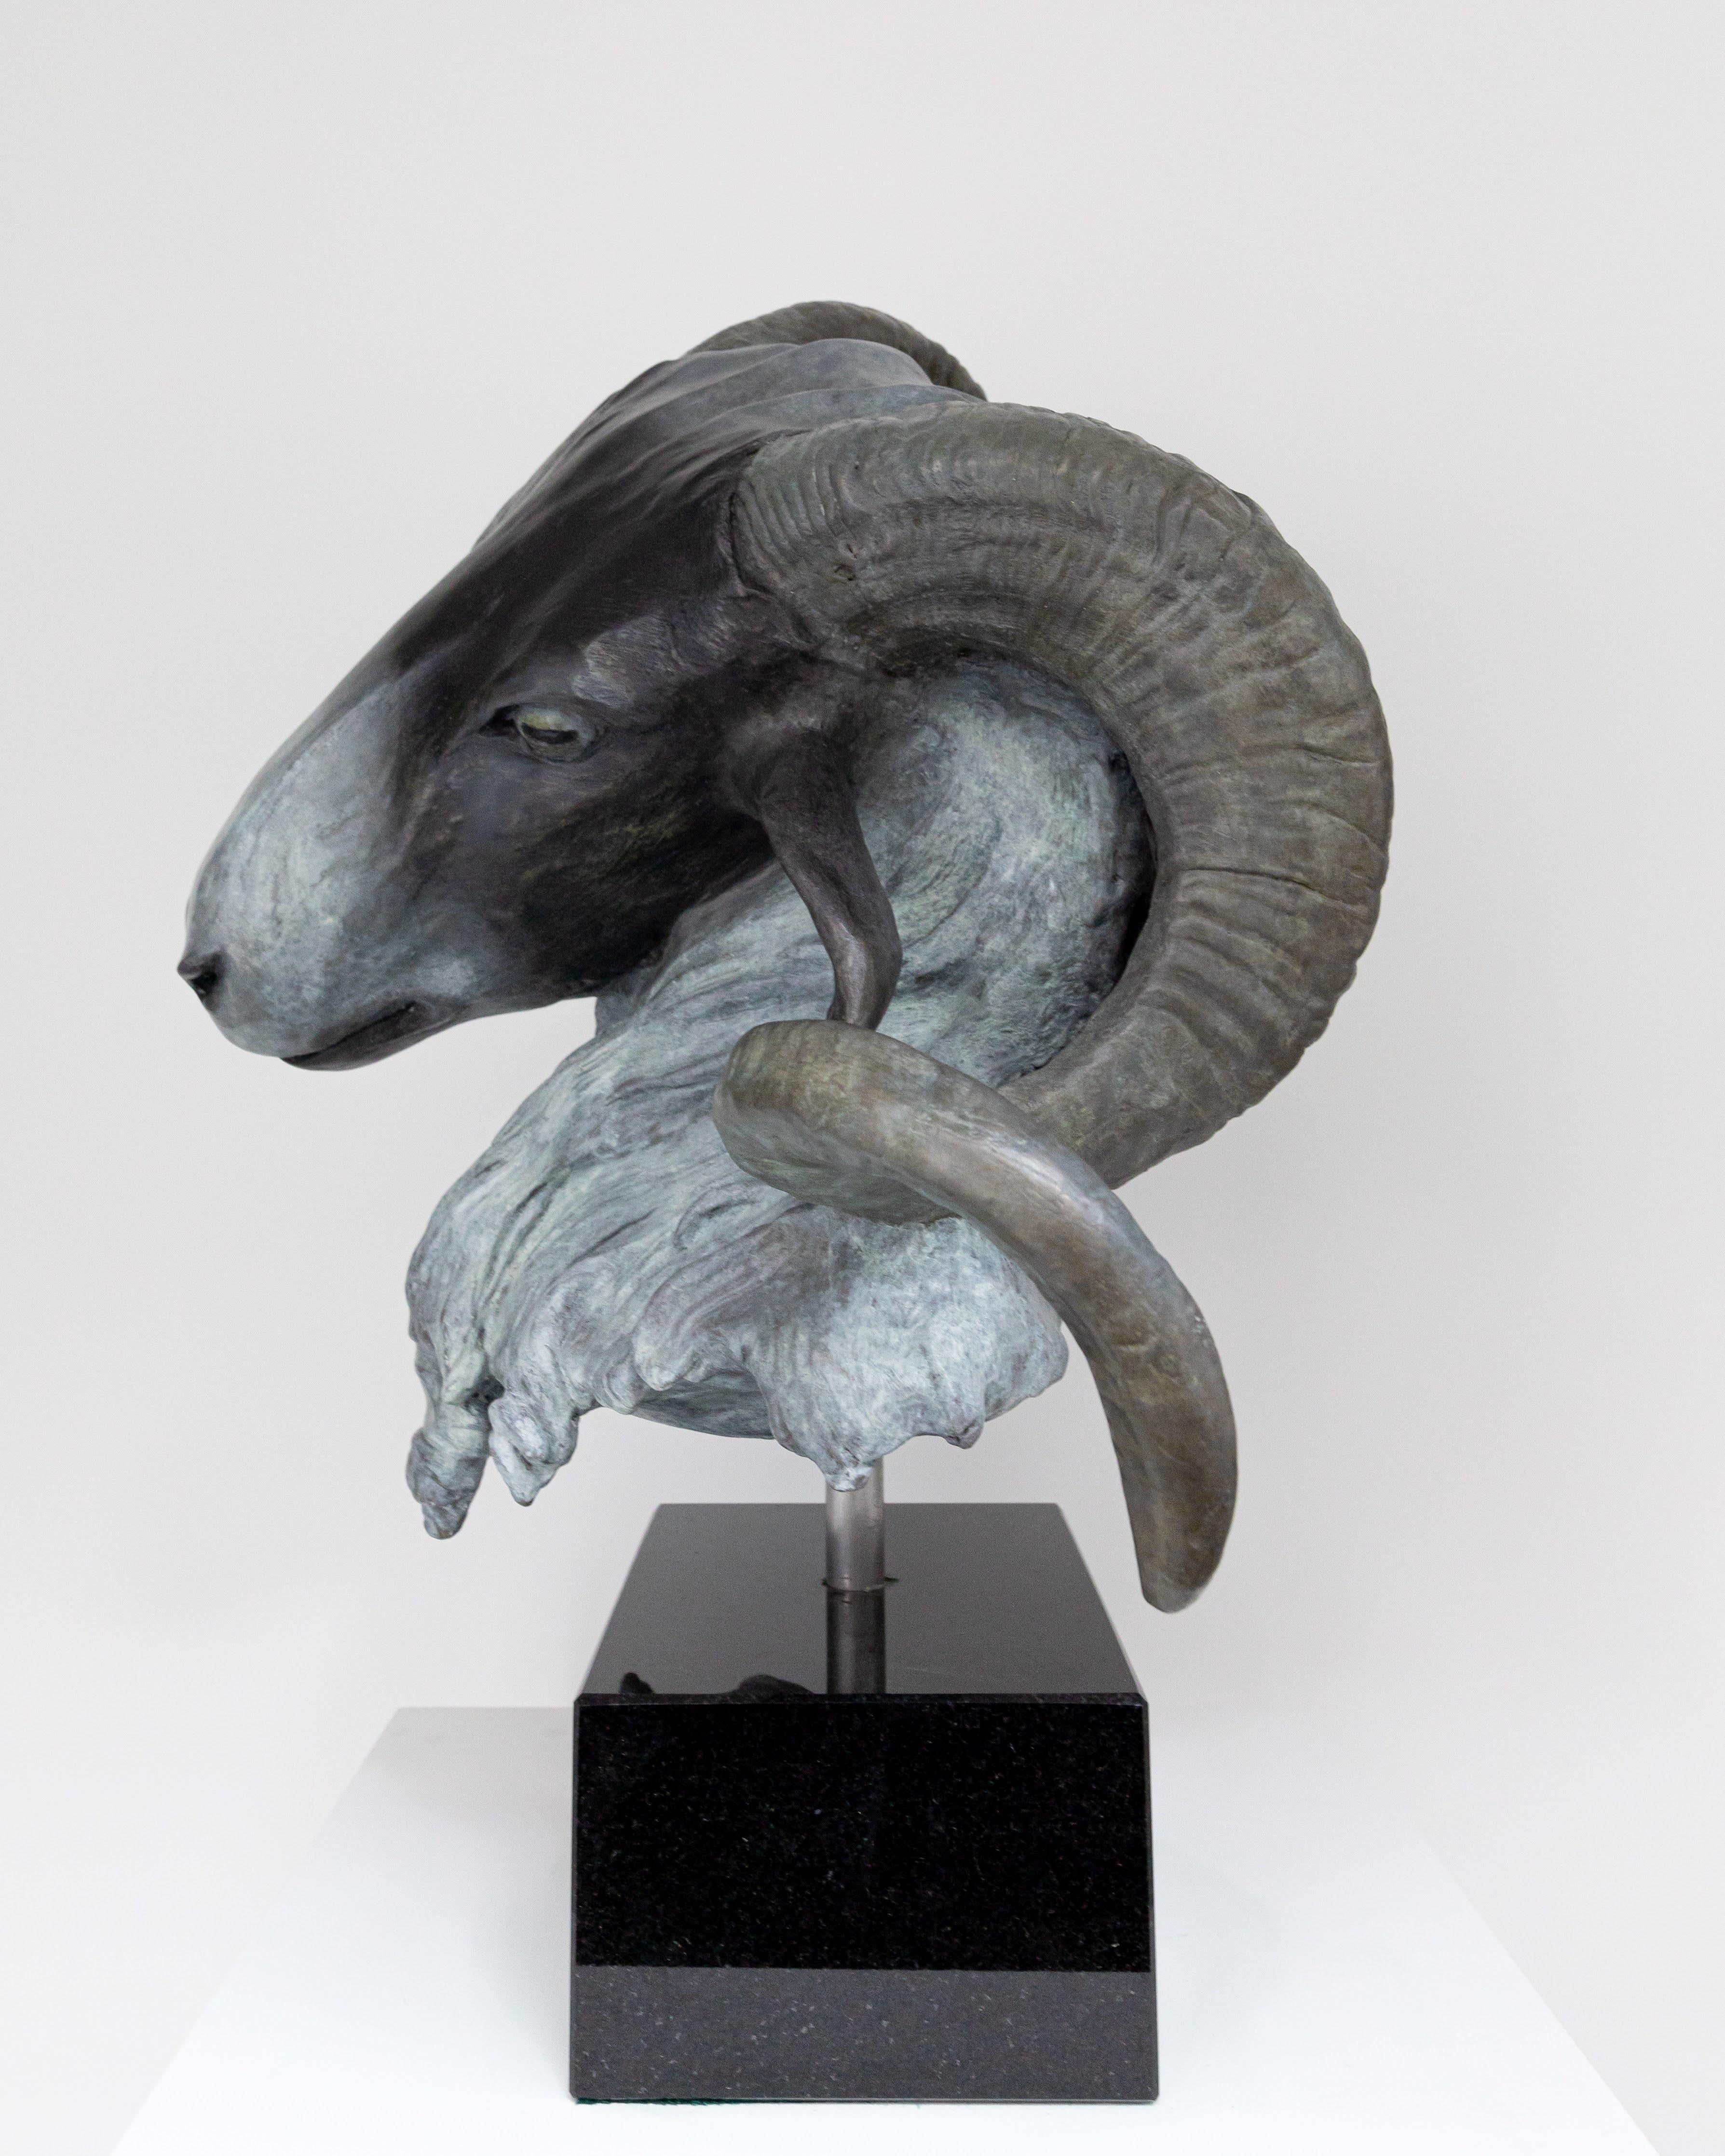 Scottish Blackface Ram (Ovis Aries) - Naturalistic Sculpture by Barry Davies